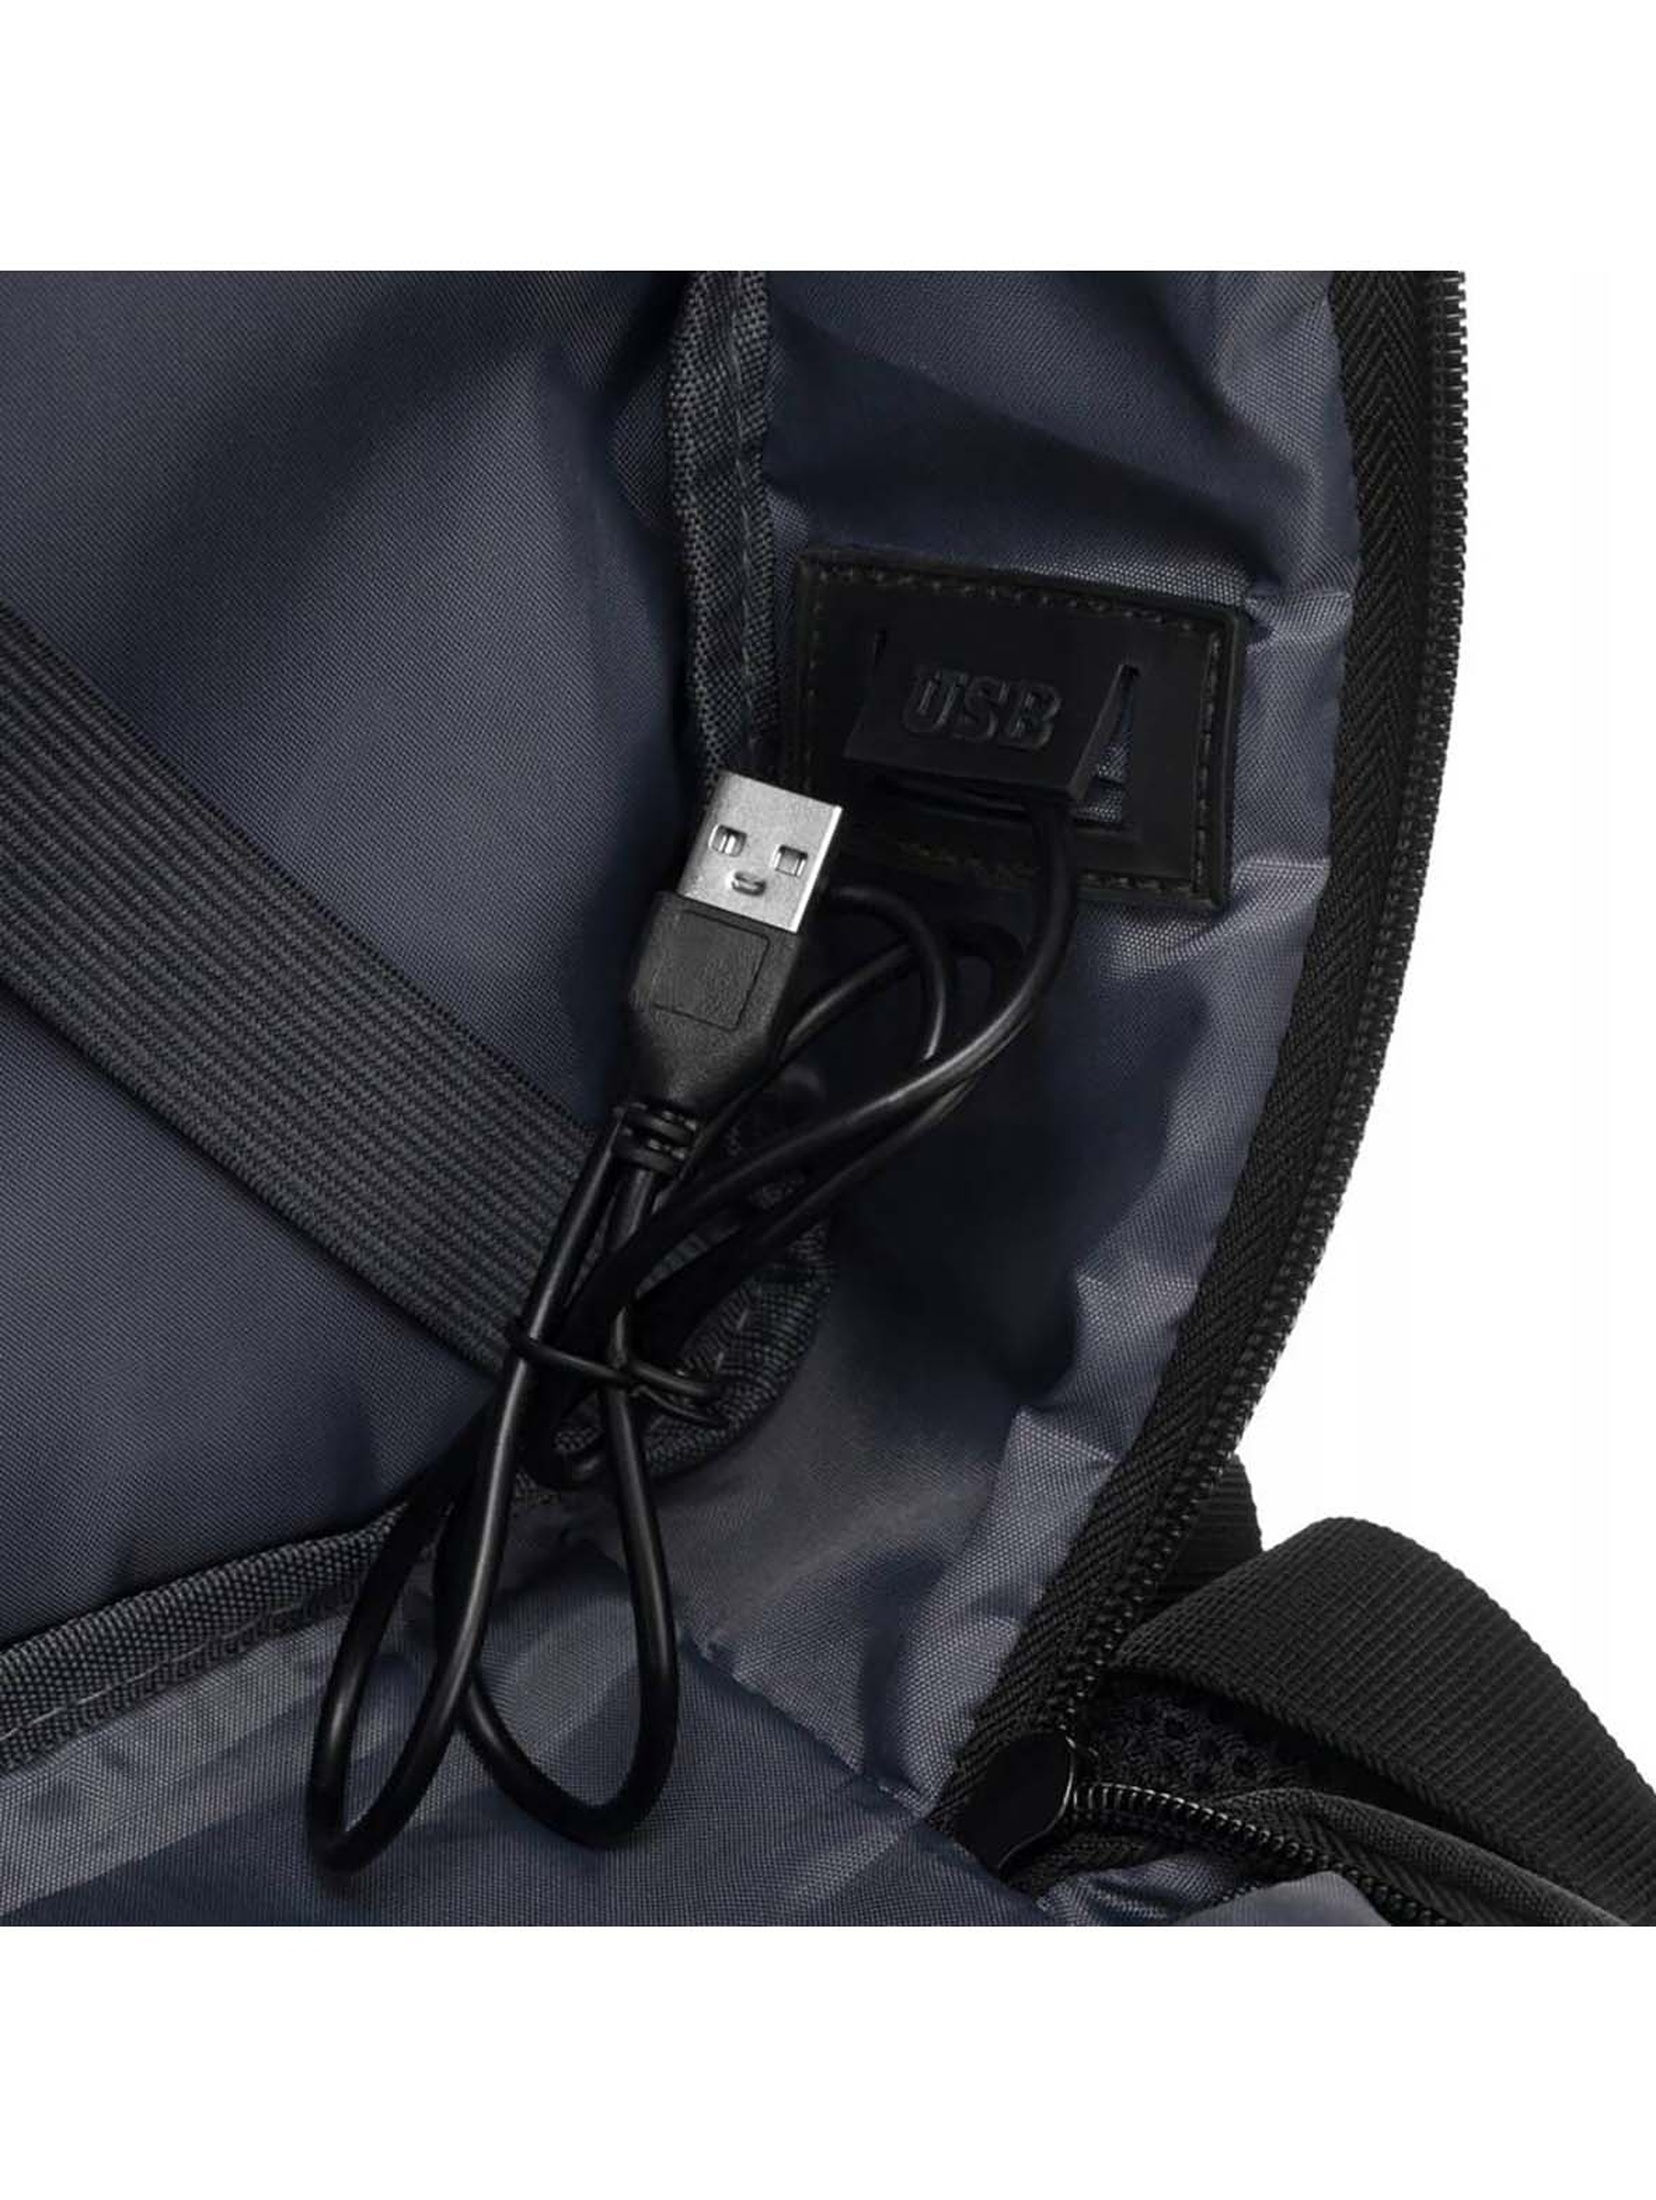 Plecak podróżny szary z miejscem na laptopa i portem USB